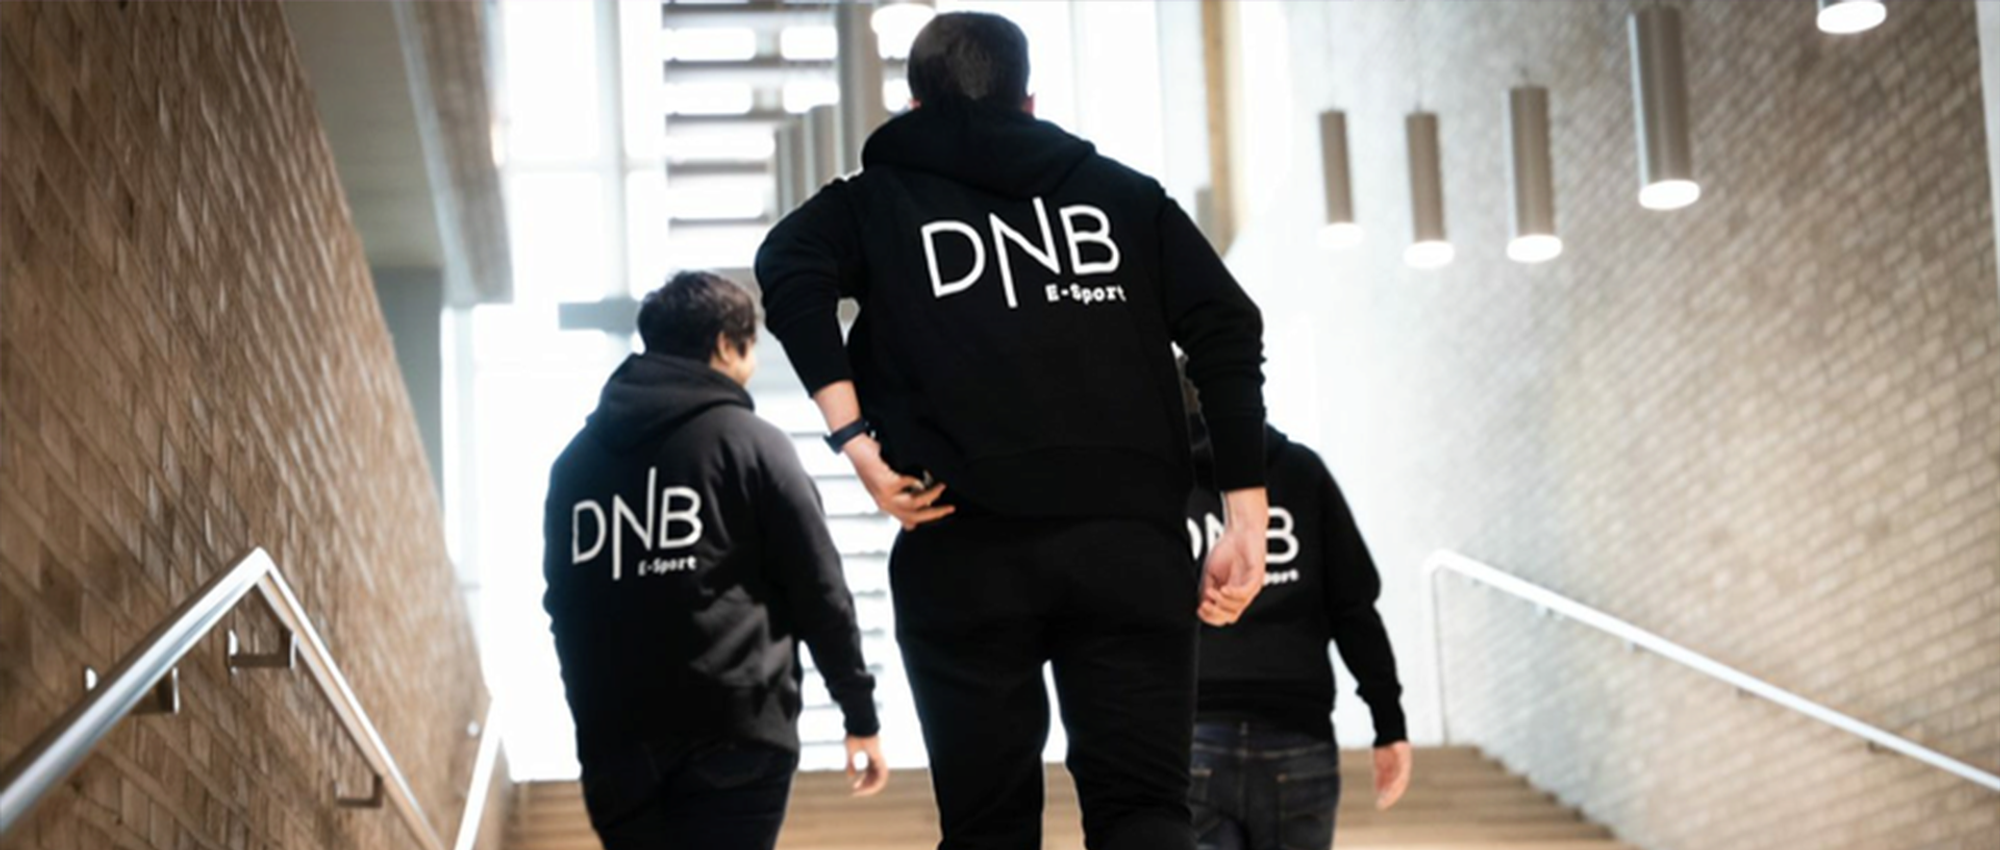 DNB under reklameinnspilling
Foto: DNB/Privat